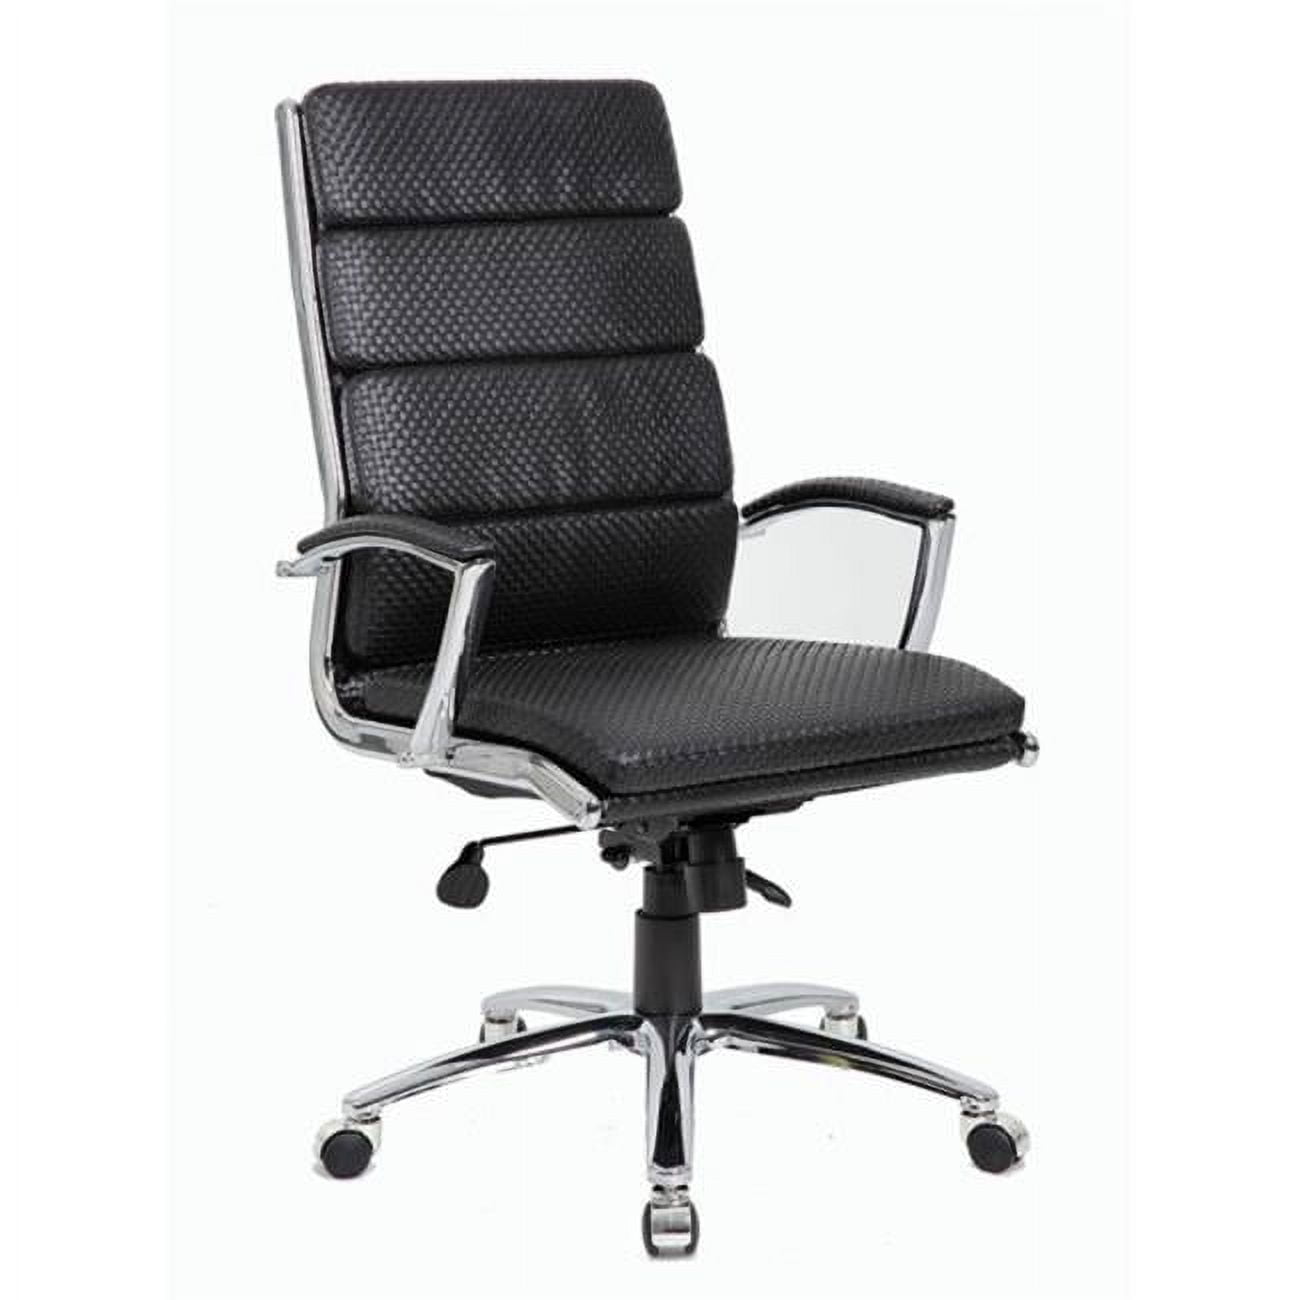 B9471-bkw Executive Vinyl Chair With Metal Chrome Finish, Black